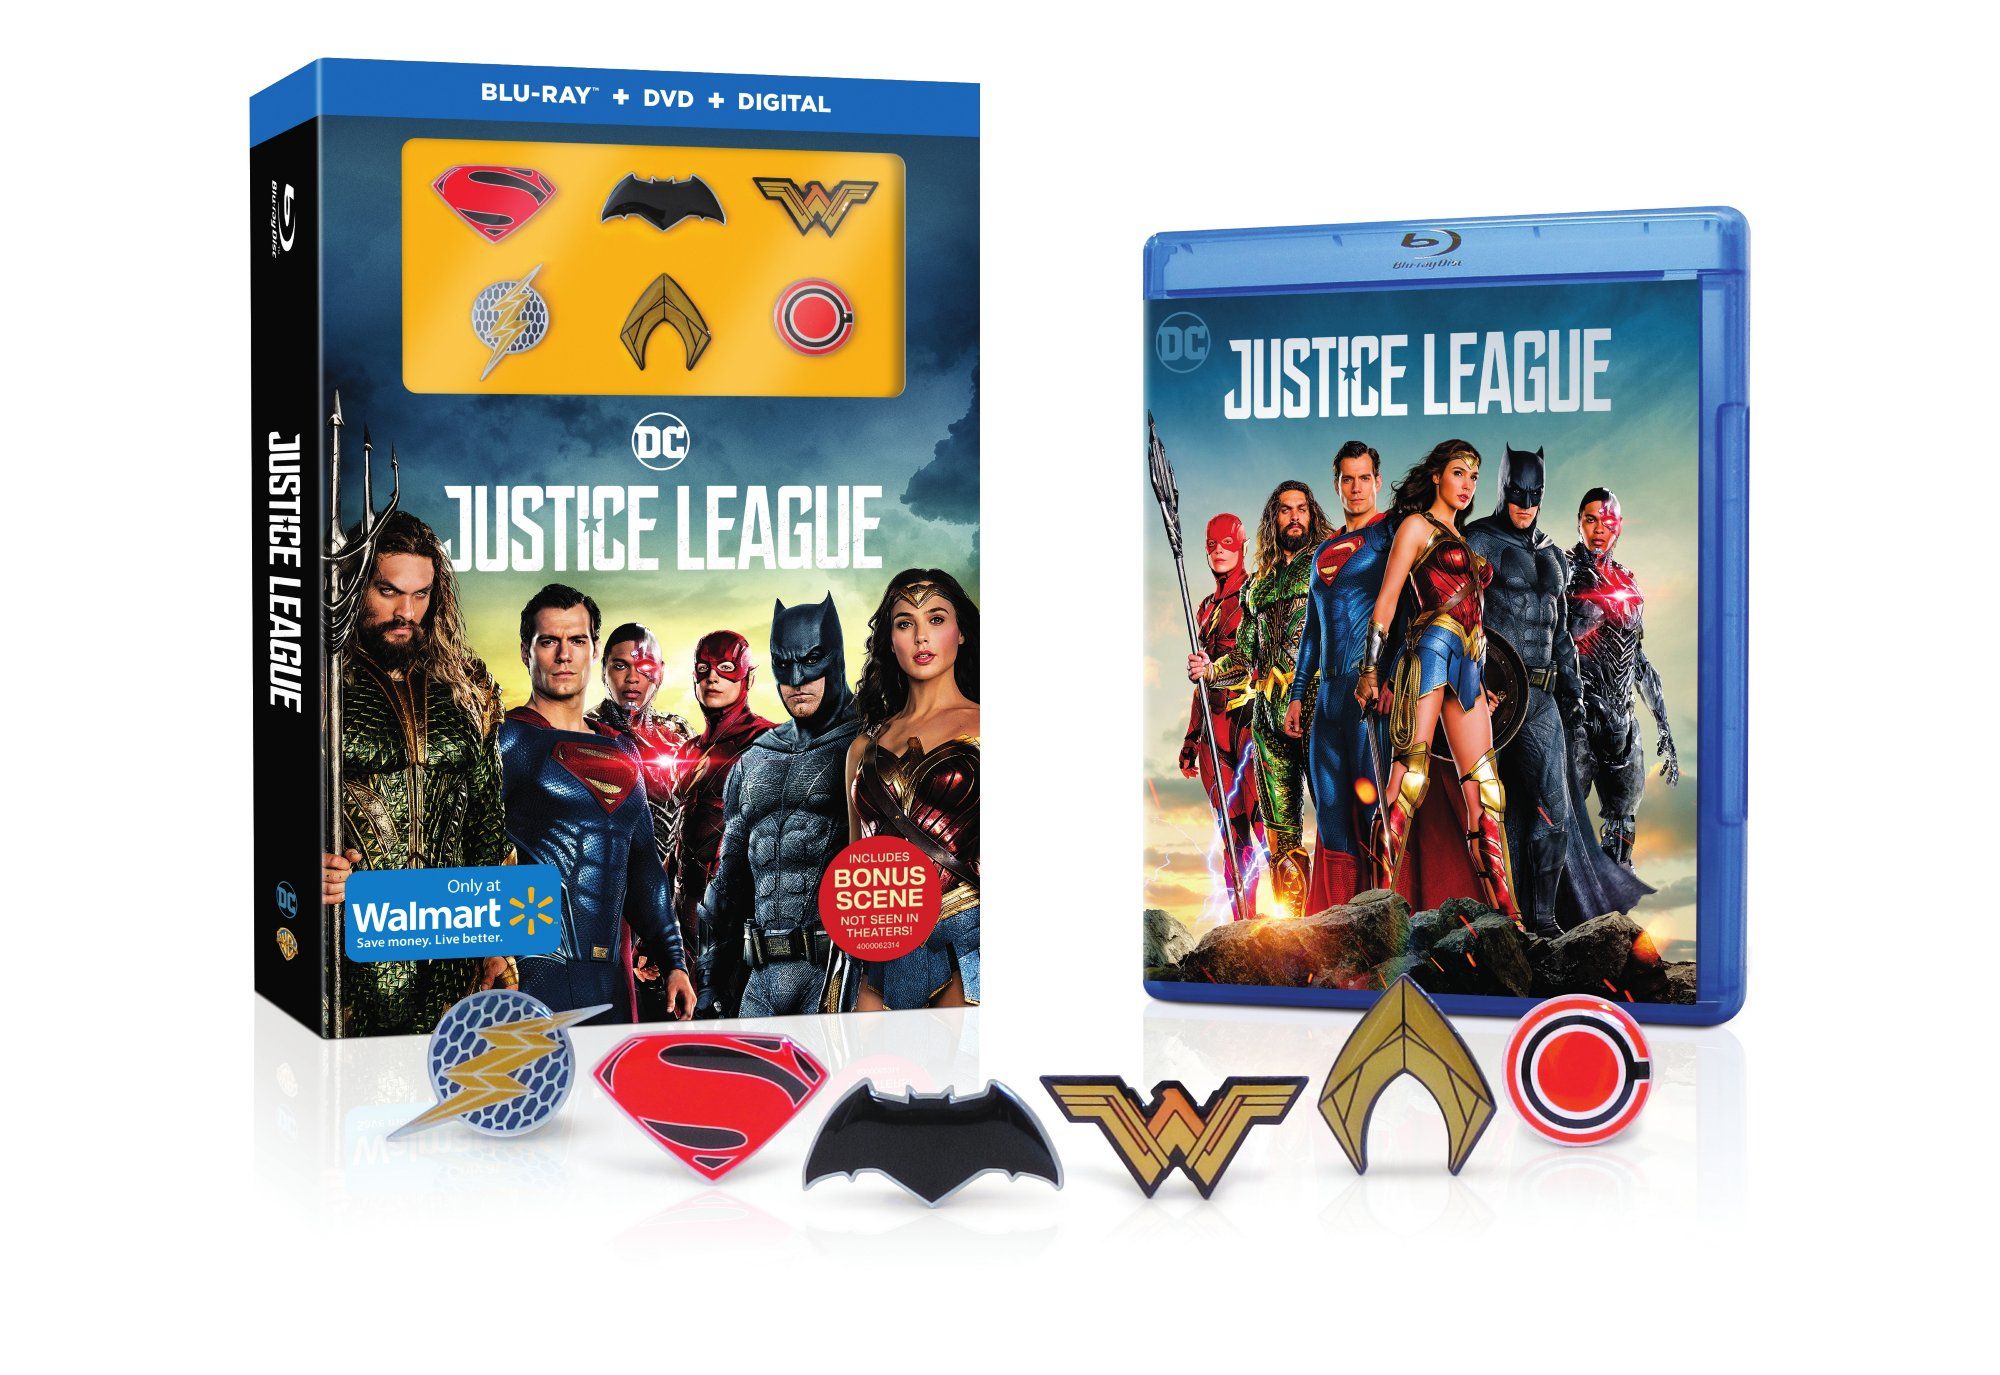 Justice League Blu-ray-functies Bonusscène die niet in theaters wordt weergegeven